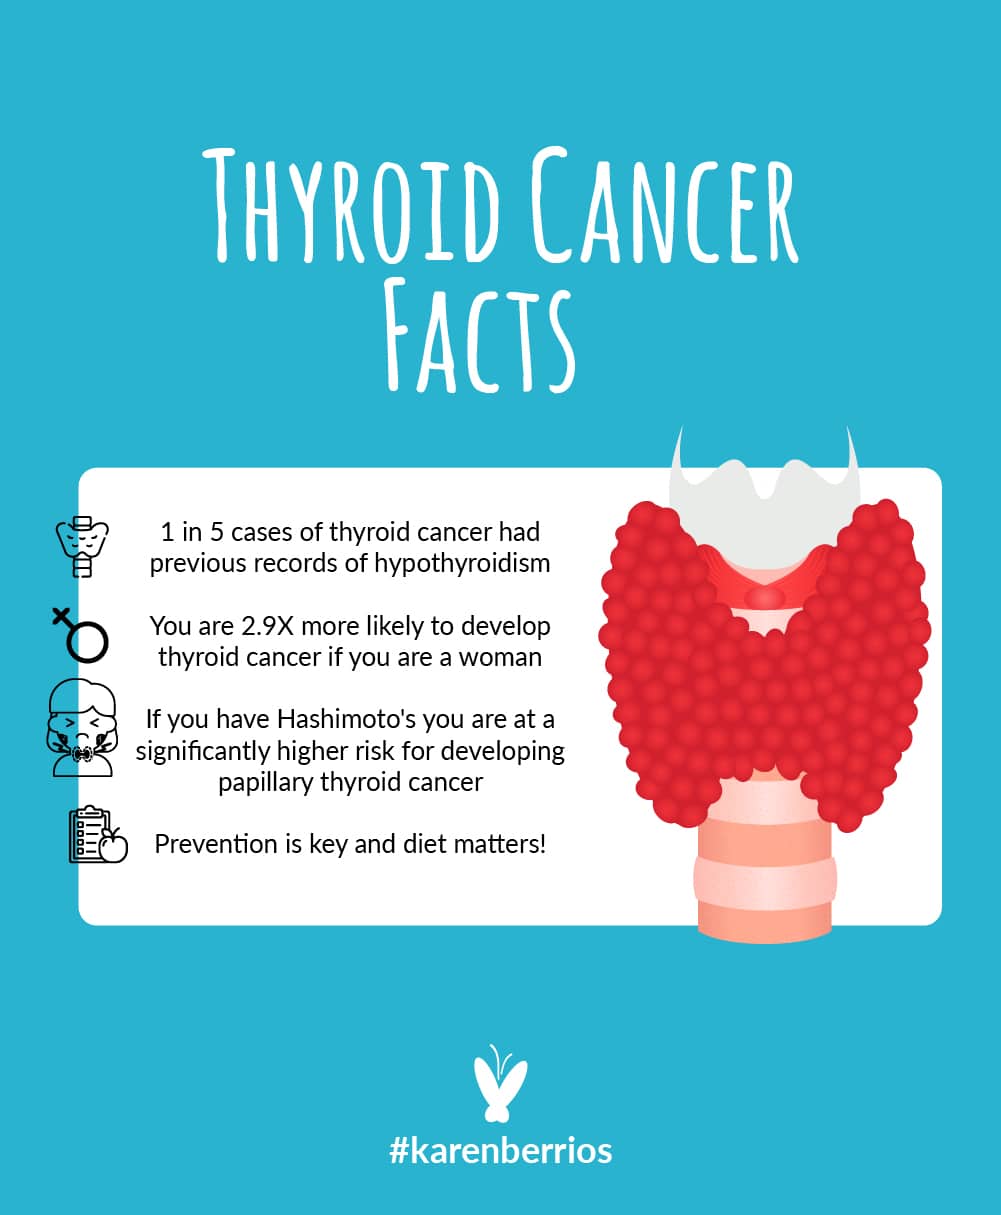 Does Hypothyroidism And Hashimotos Cause Thyroid Cancer?